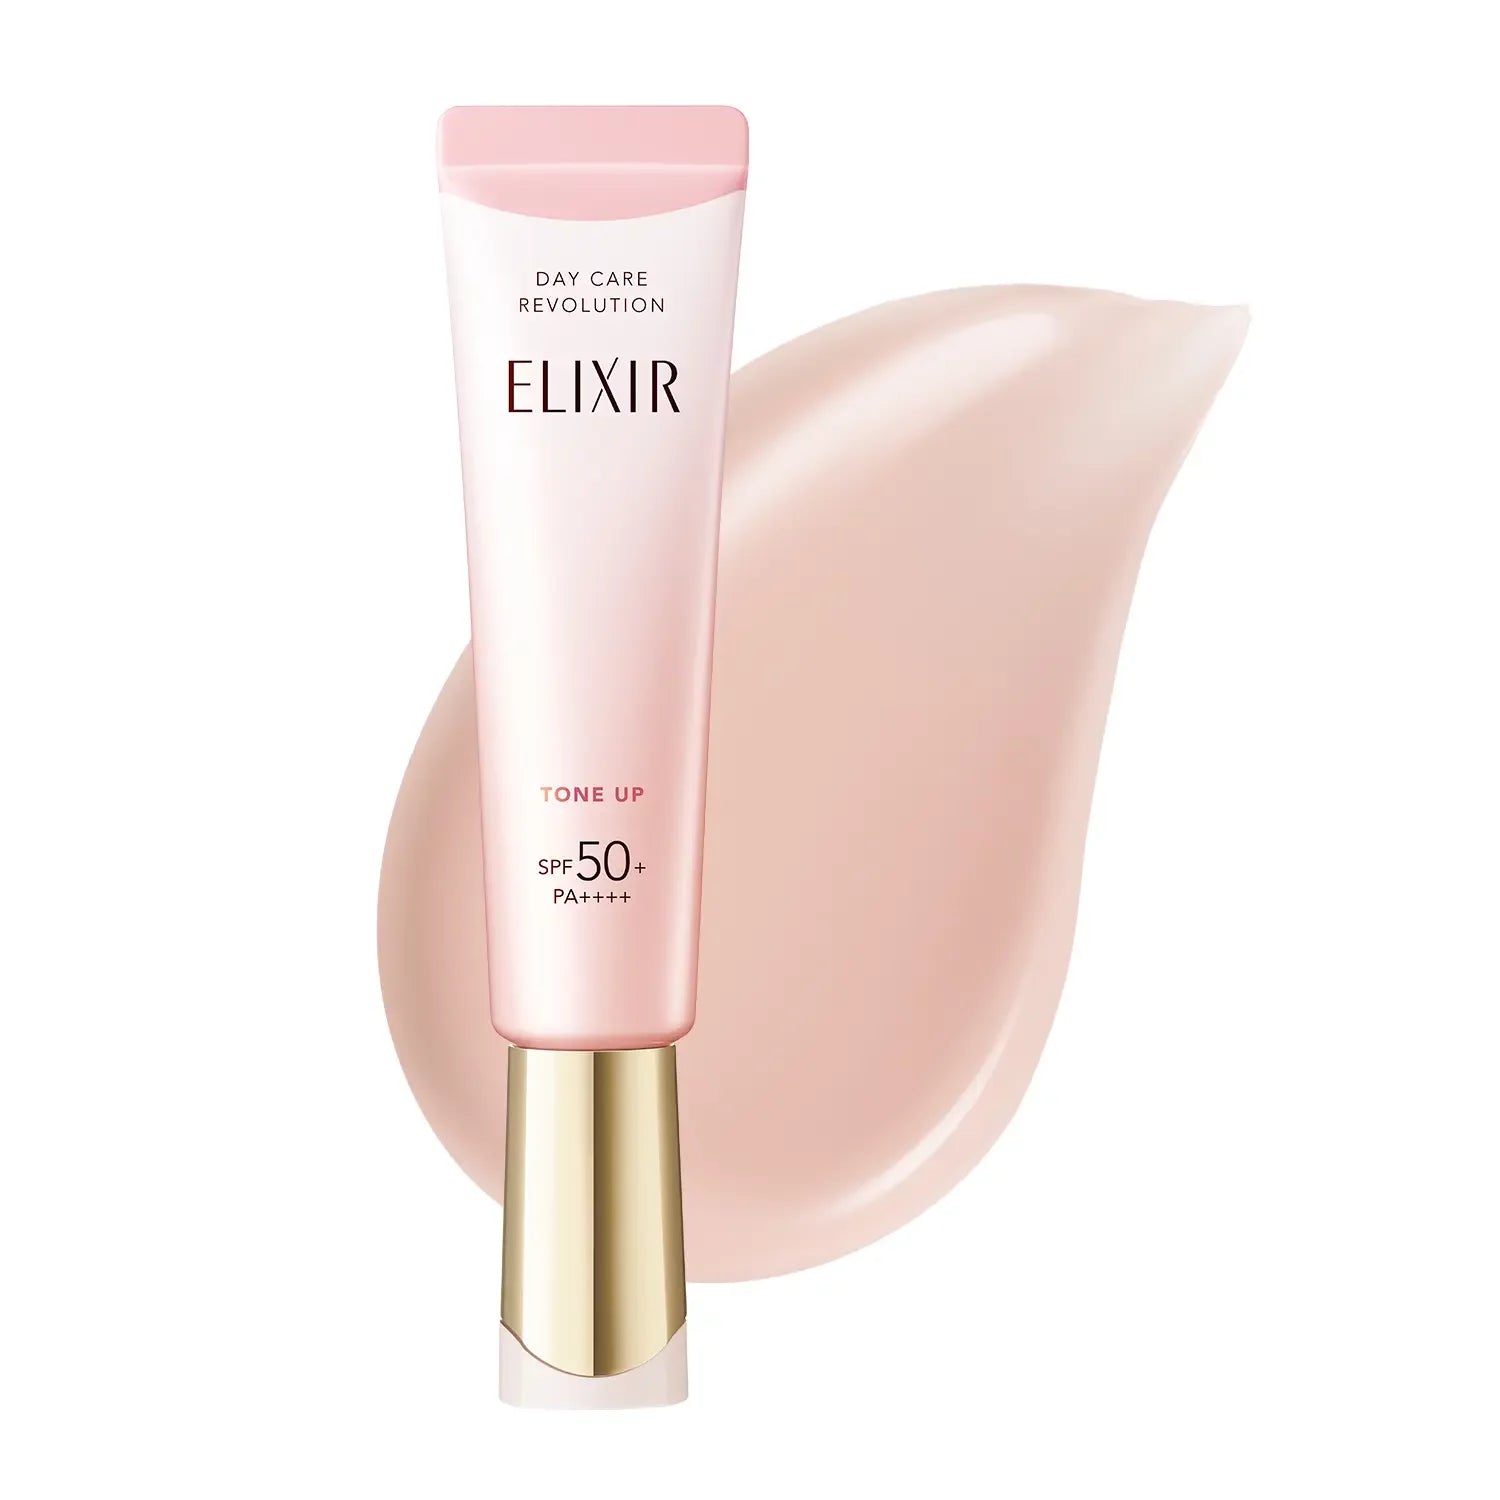 Shiseido Elixir Day Care Multifunctional Tone Up Emulsion Baby Pink SPF 50+ 35g